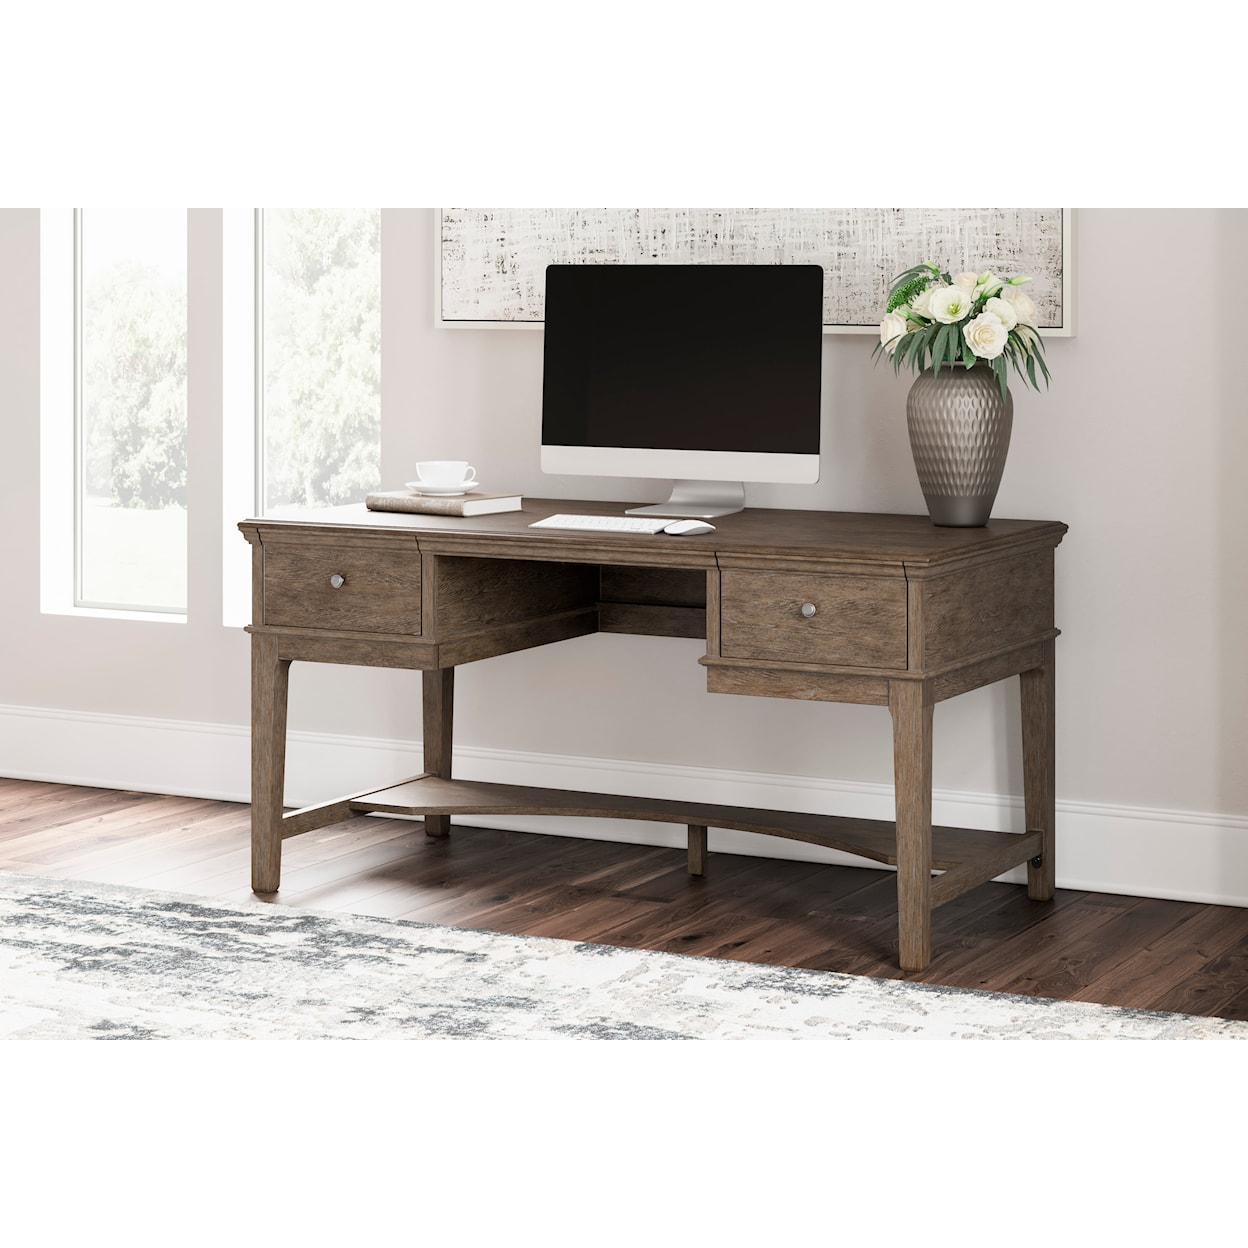 Signature Design by Ashley Furniture Janismore Home Office Storage Leg Desk